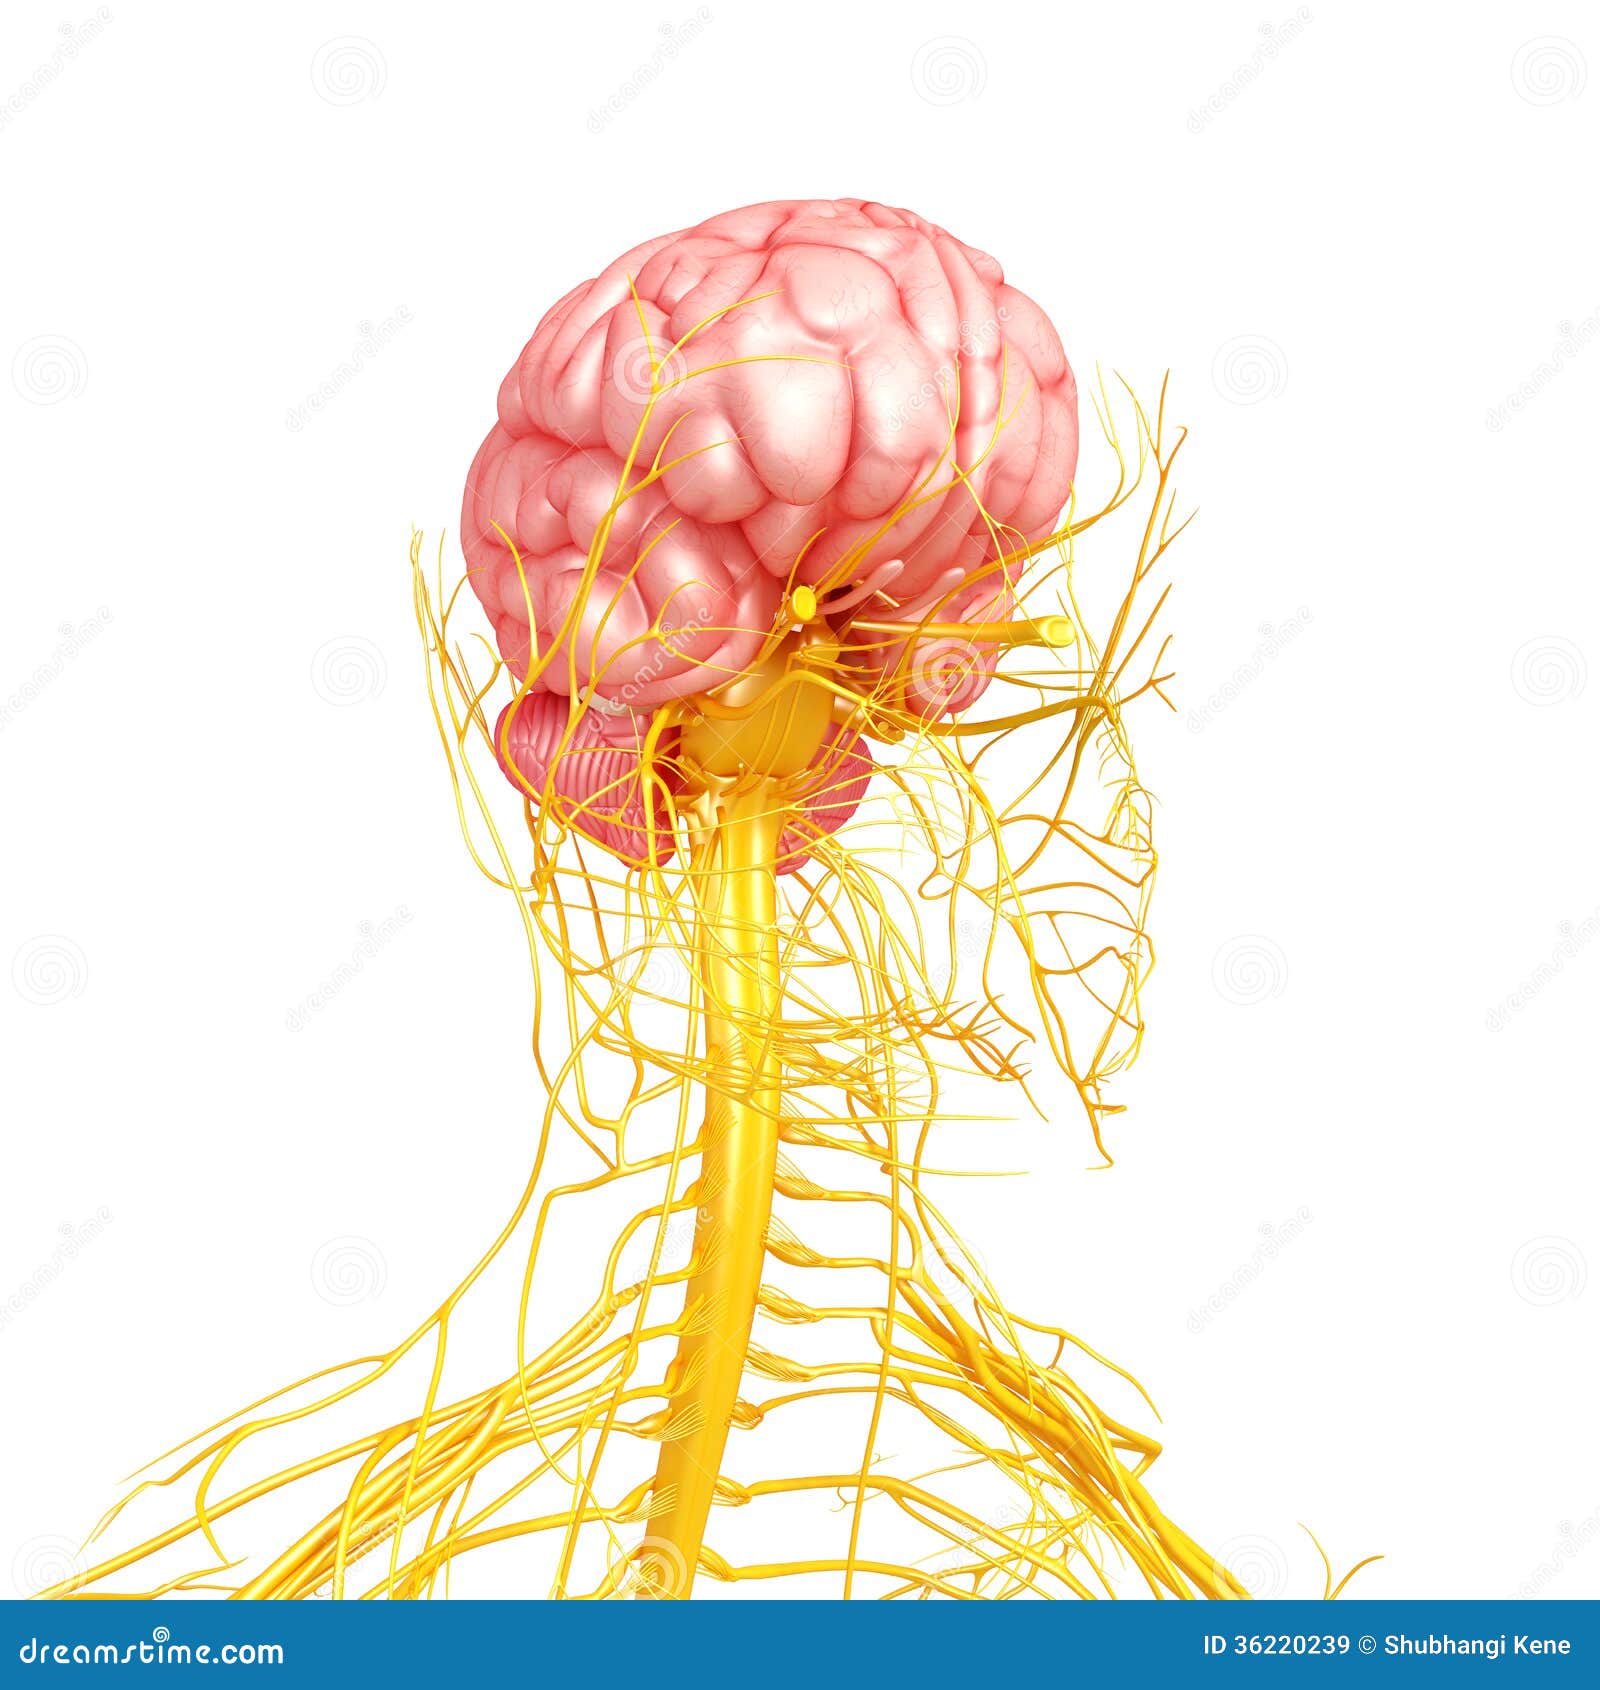 Nervous System Of Human Front Side View Stock Illustration - Image